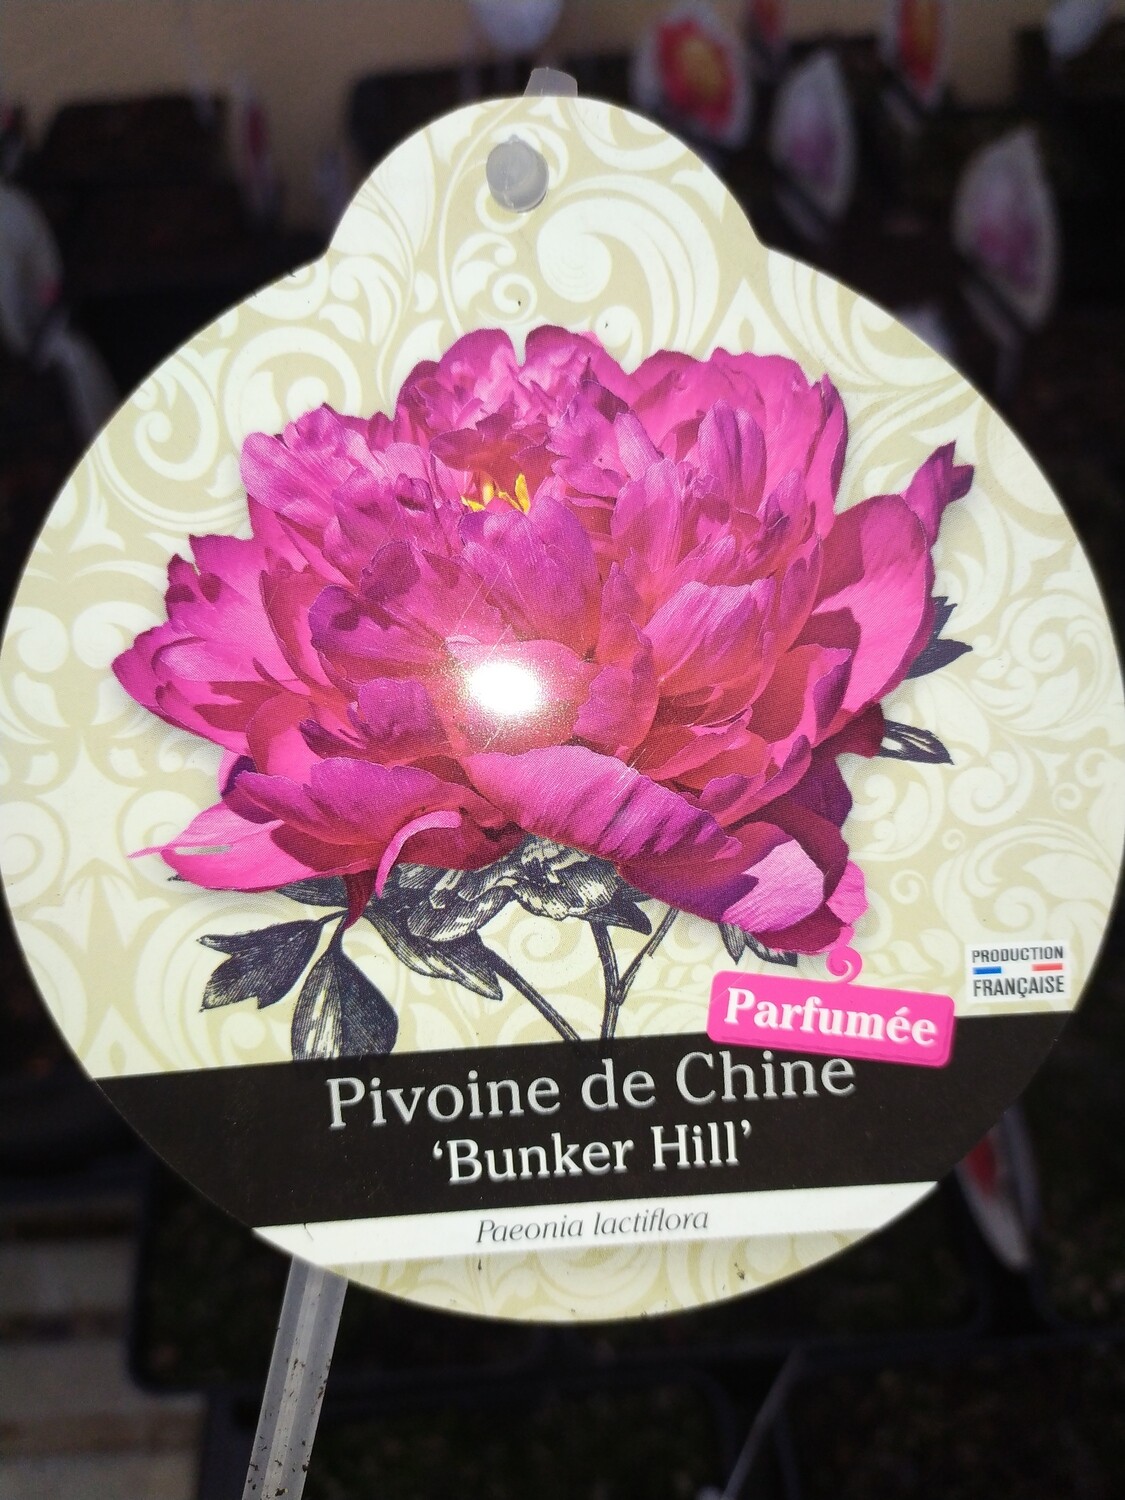 PAEONIA LACTIFLORA 'BUNKER HILL' (PIVOINE DE CHINE HERBACEE)